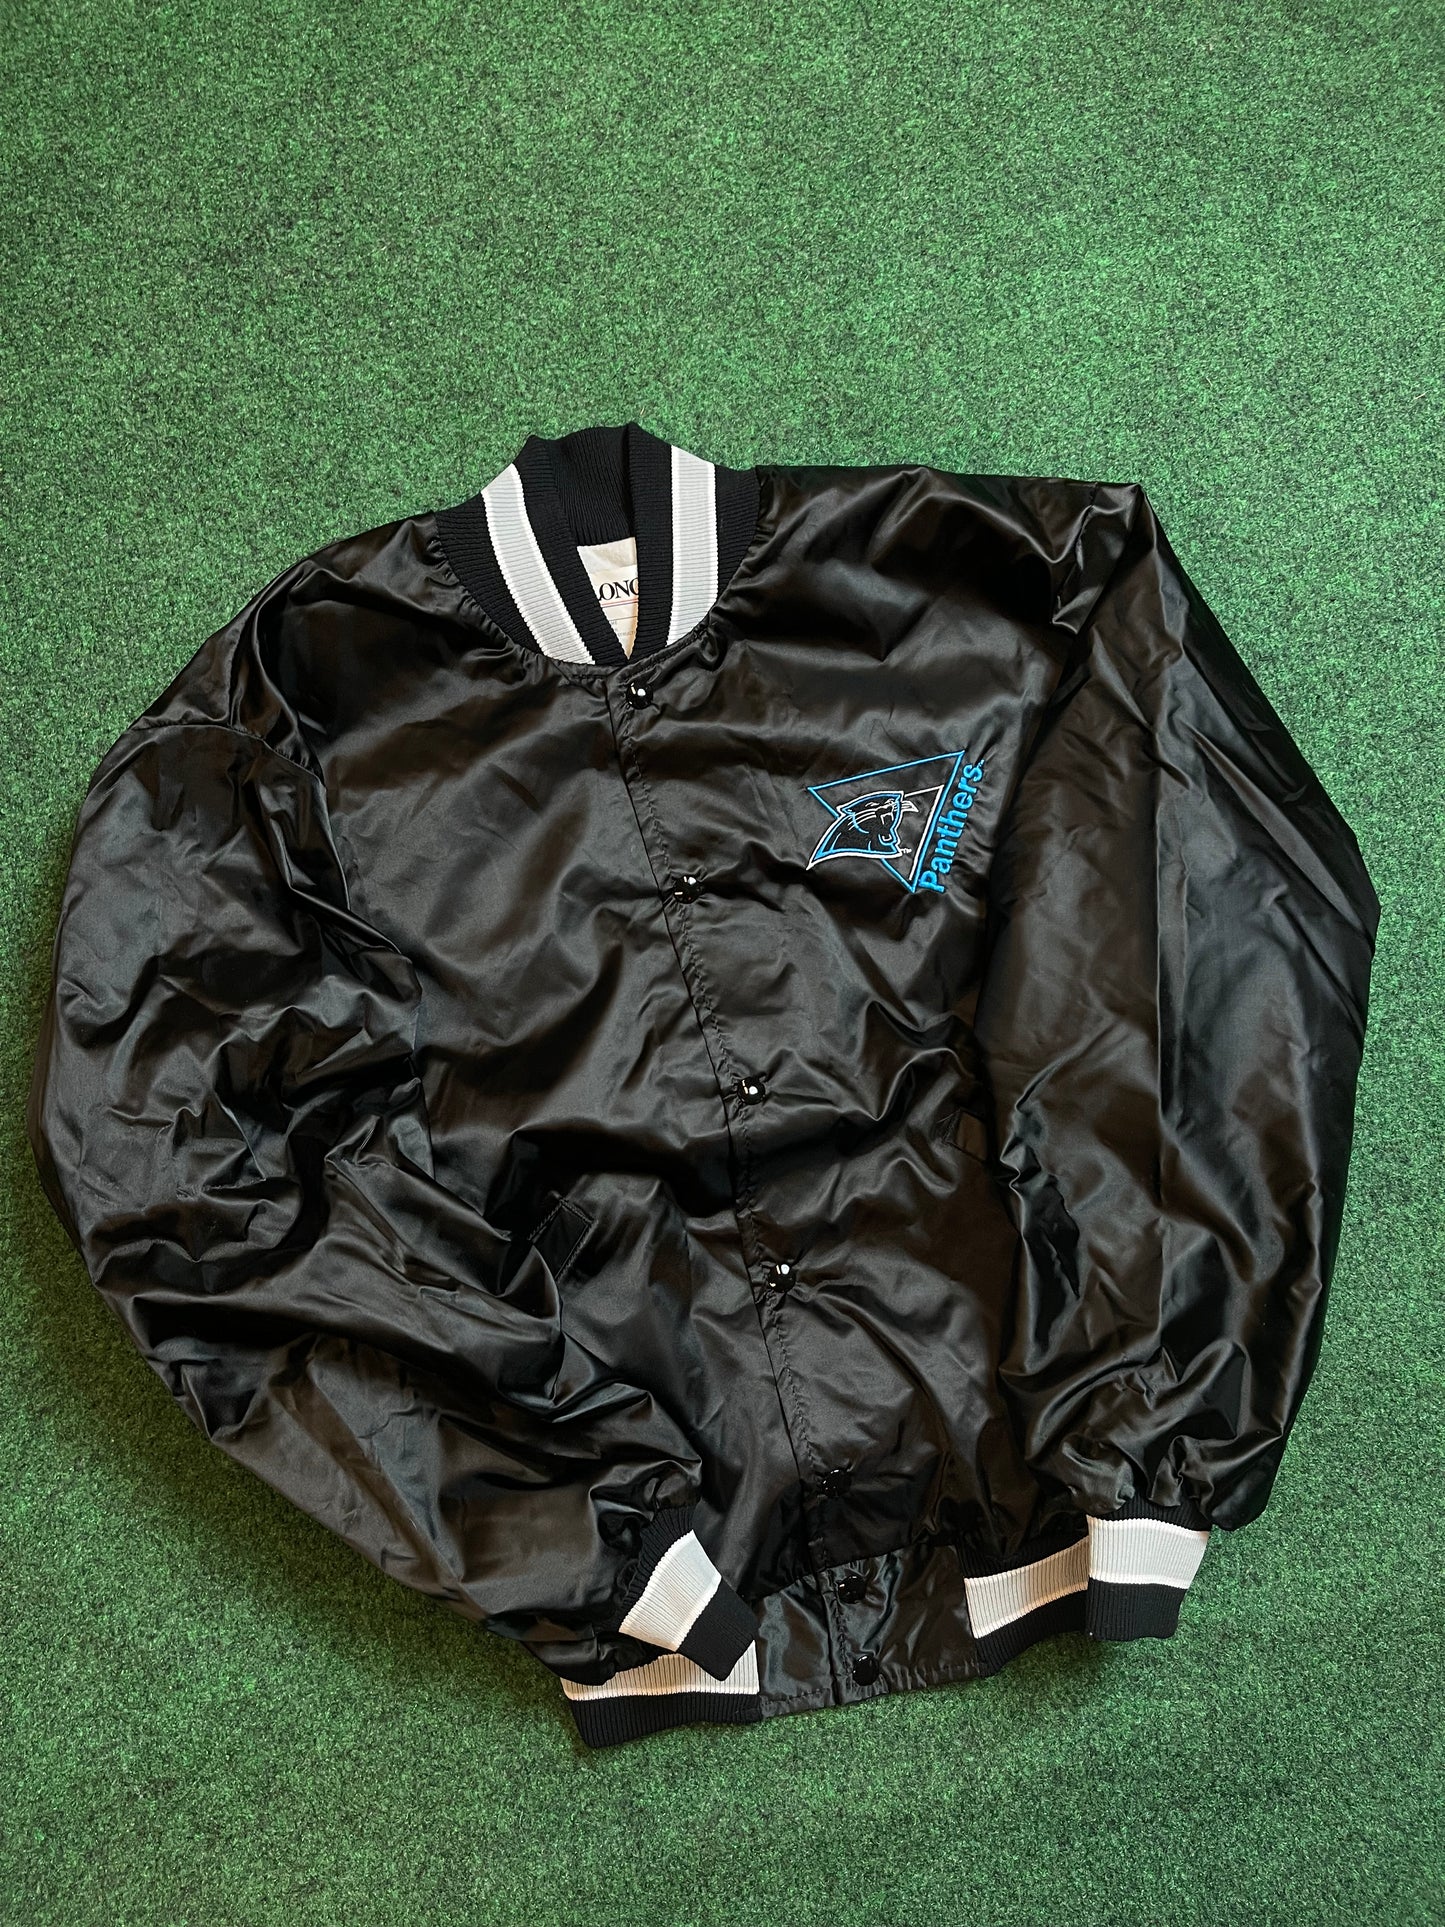 90’s Carolina Panthers Vintage NFL Satin Jacket (XL)